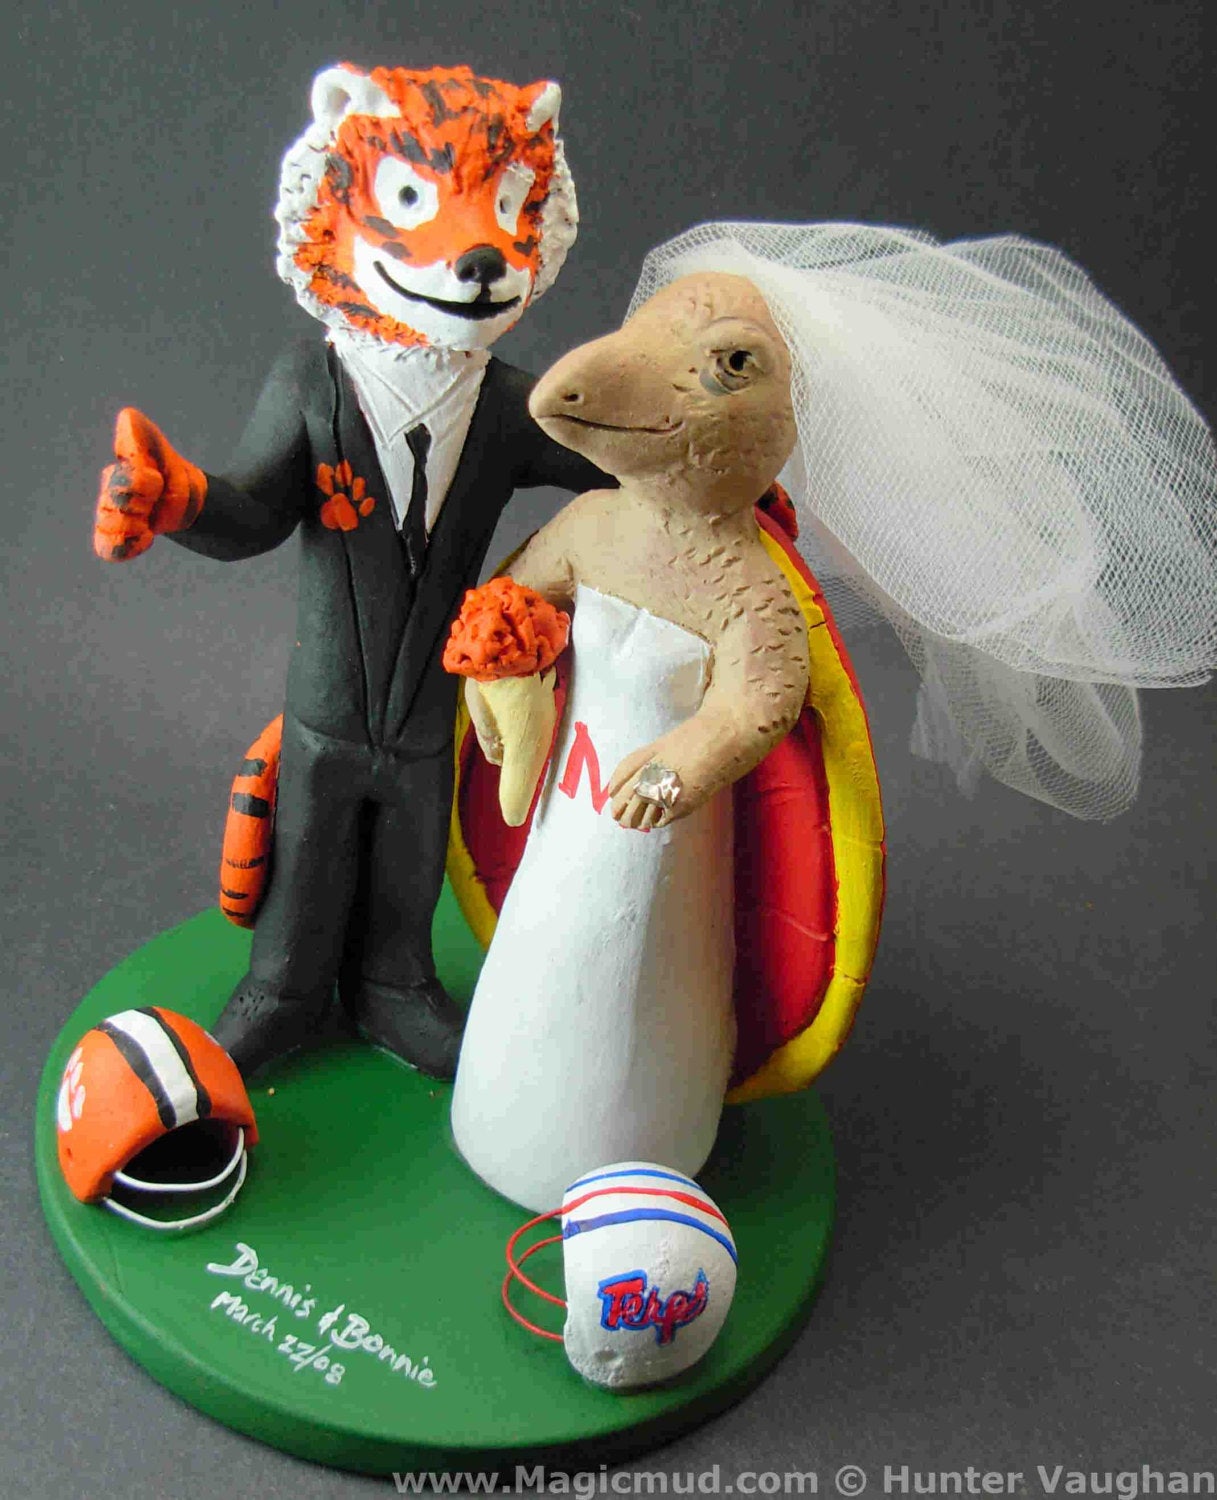 Purdue Football Wedding Cake Topper, Custom Made College Football Mascot Wedding Cake Topper - iWeddingCakeToppers